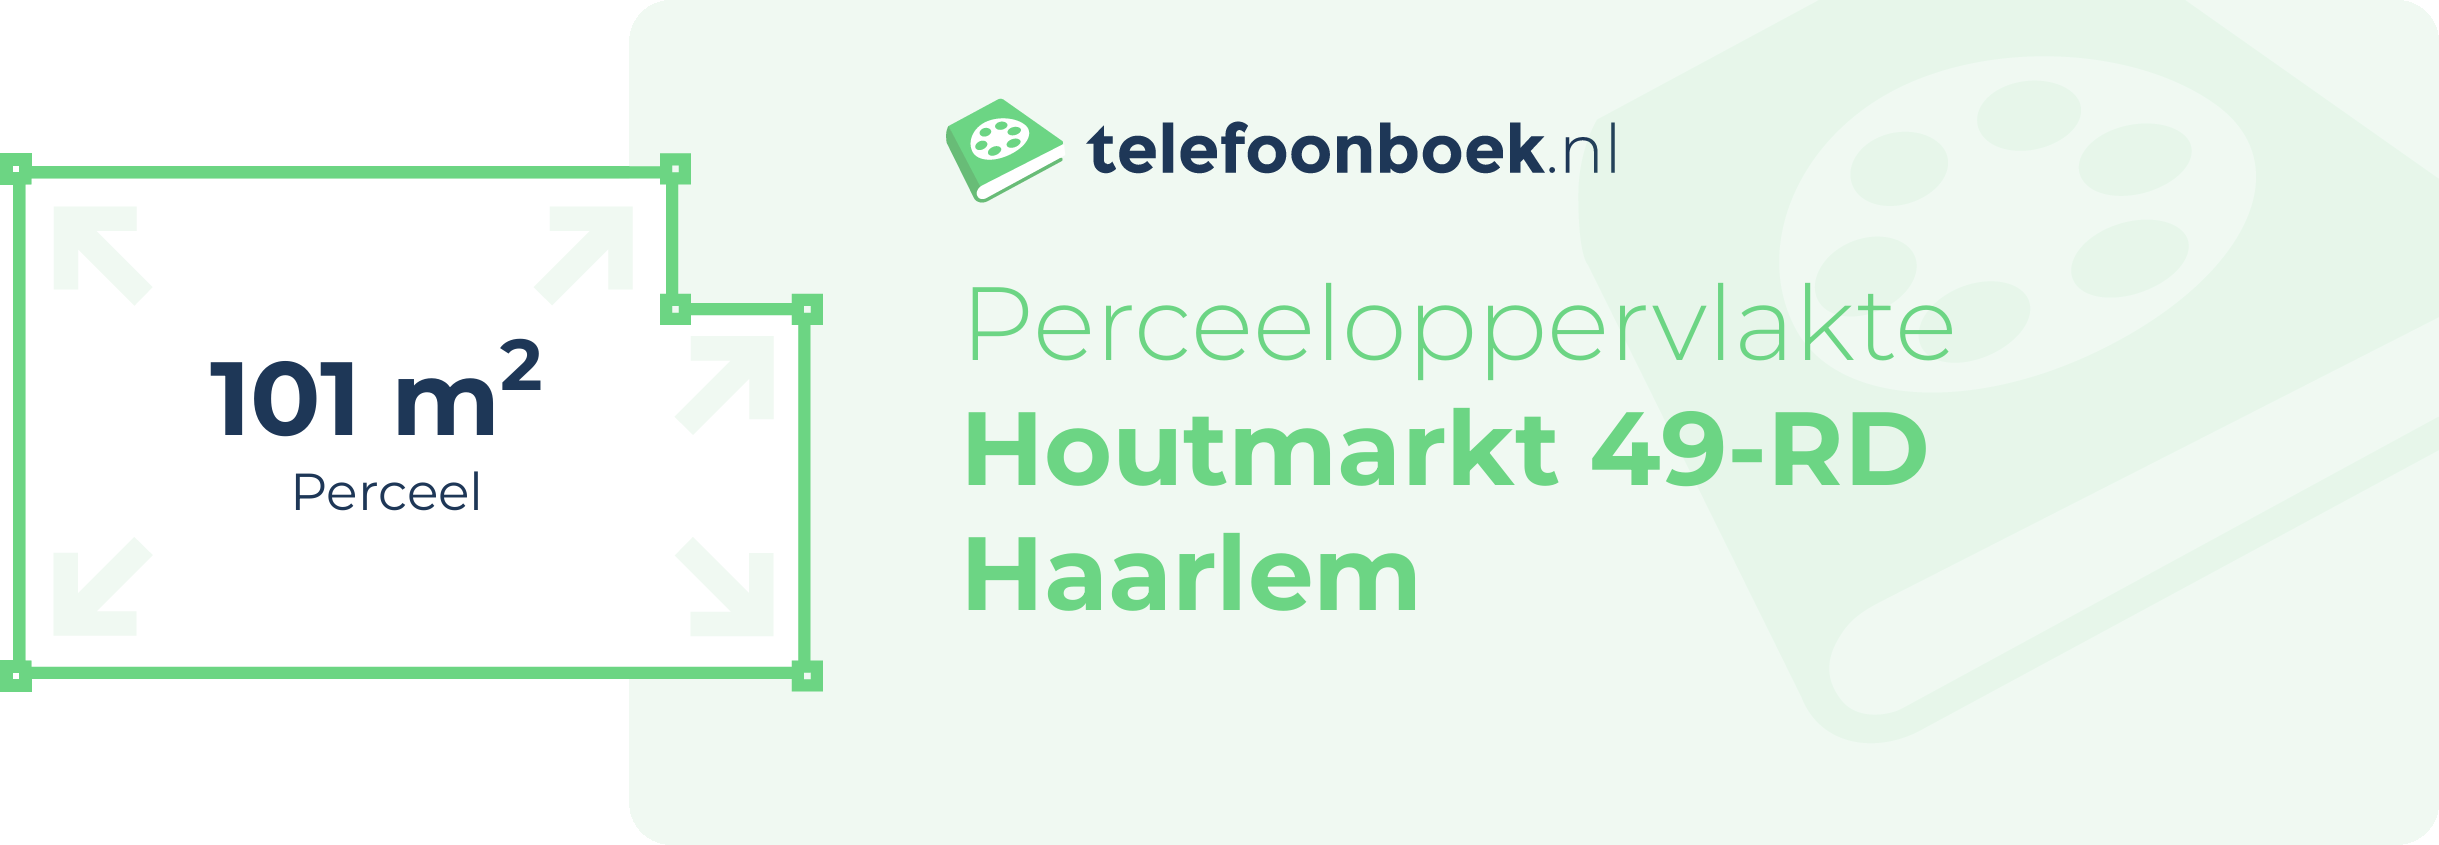 Perceeloppervlakte Houtmarkt 49-RD Haarlem